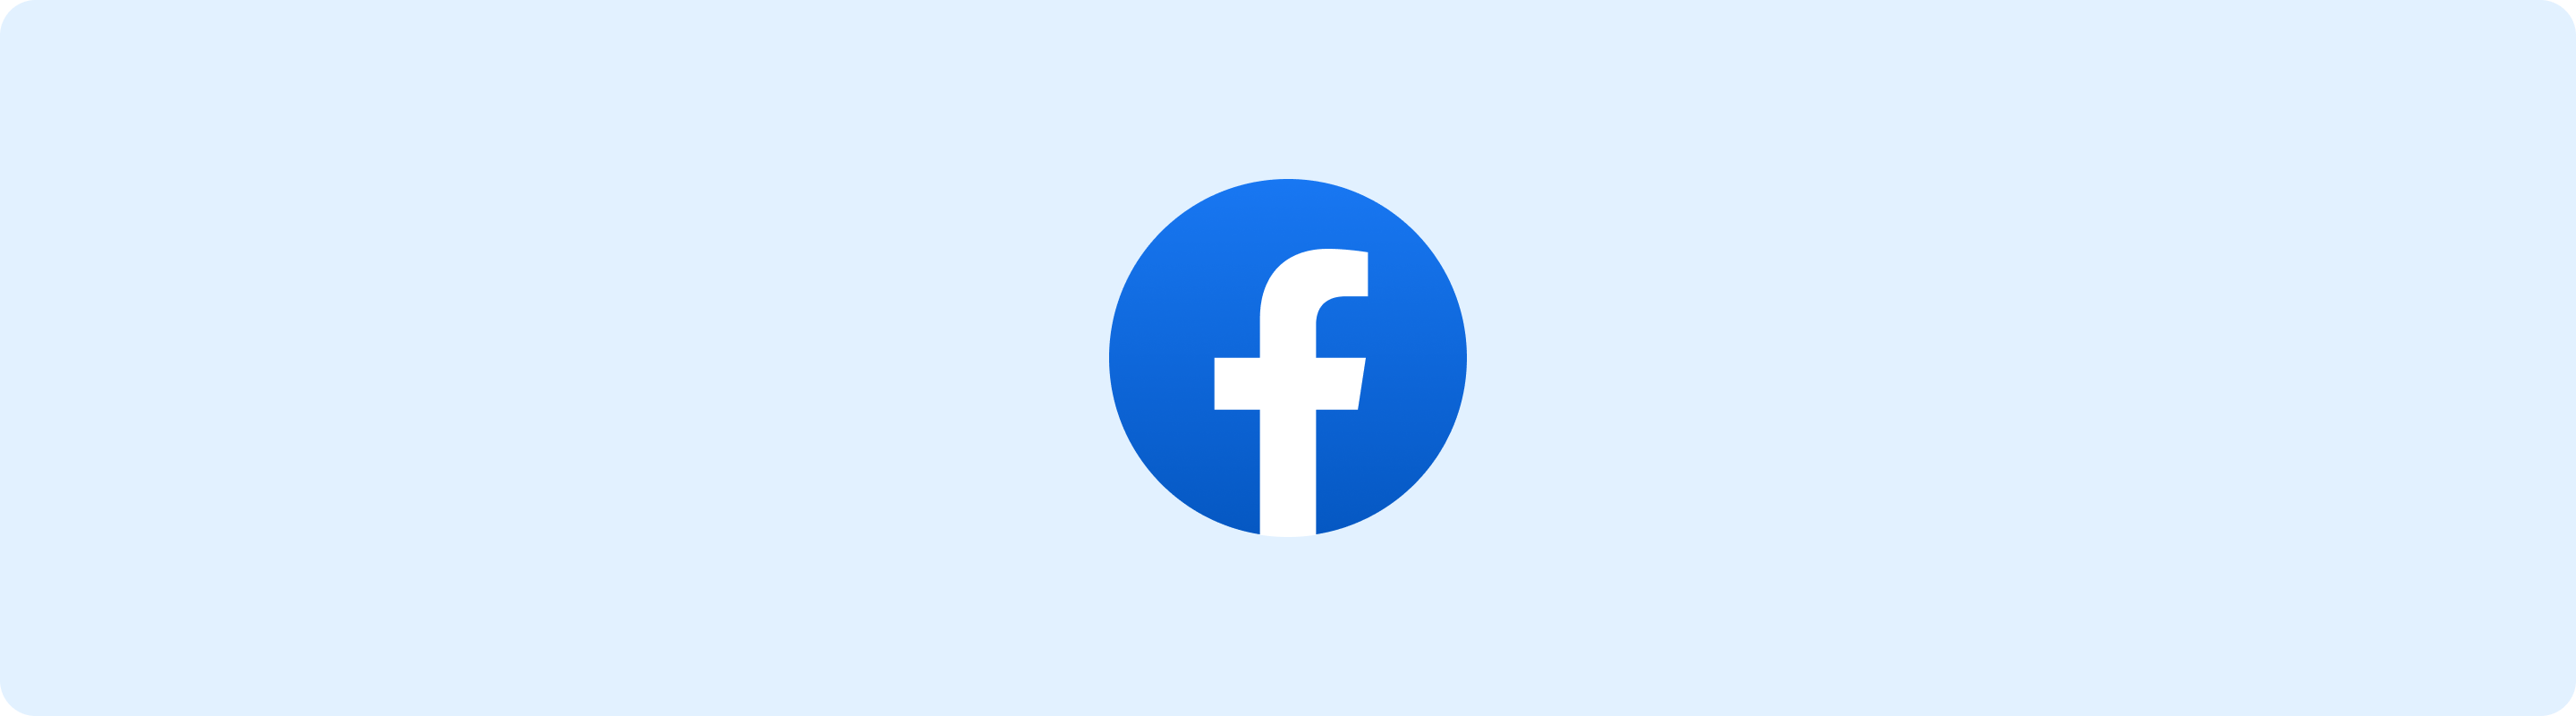 Instant Messaging für Unternehmen - Facebook.png